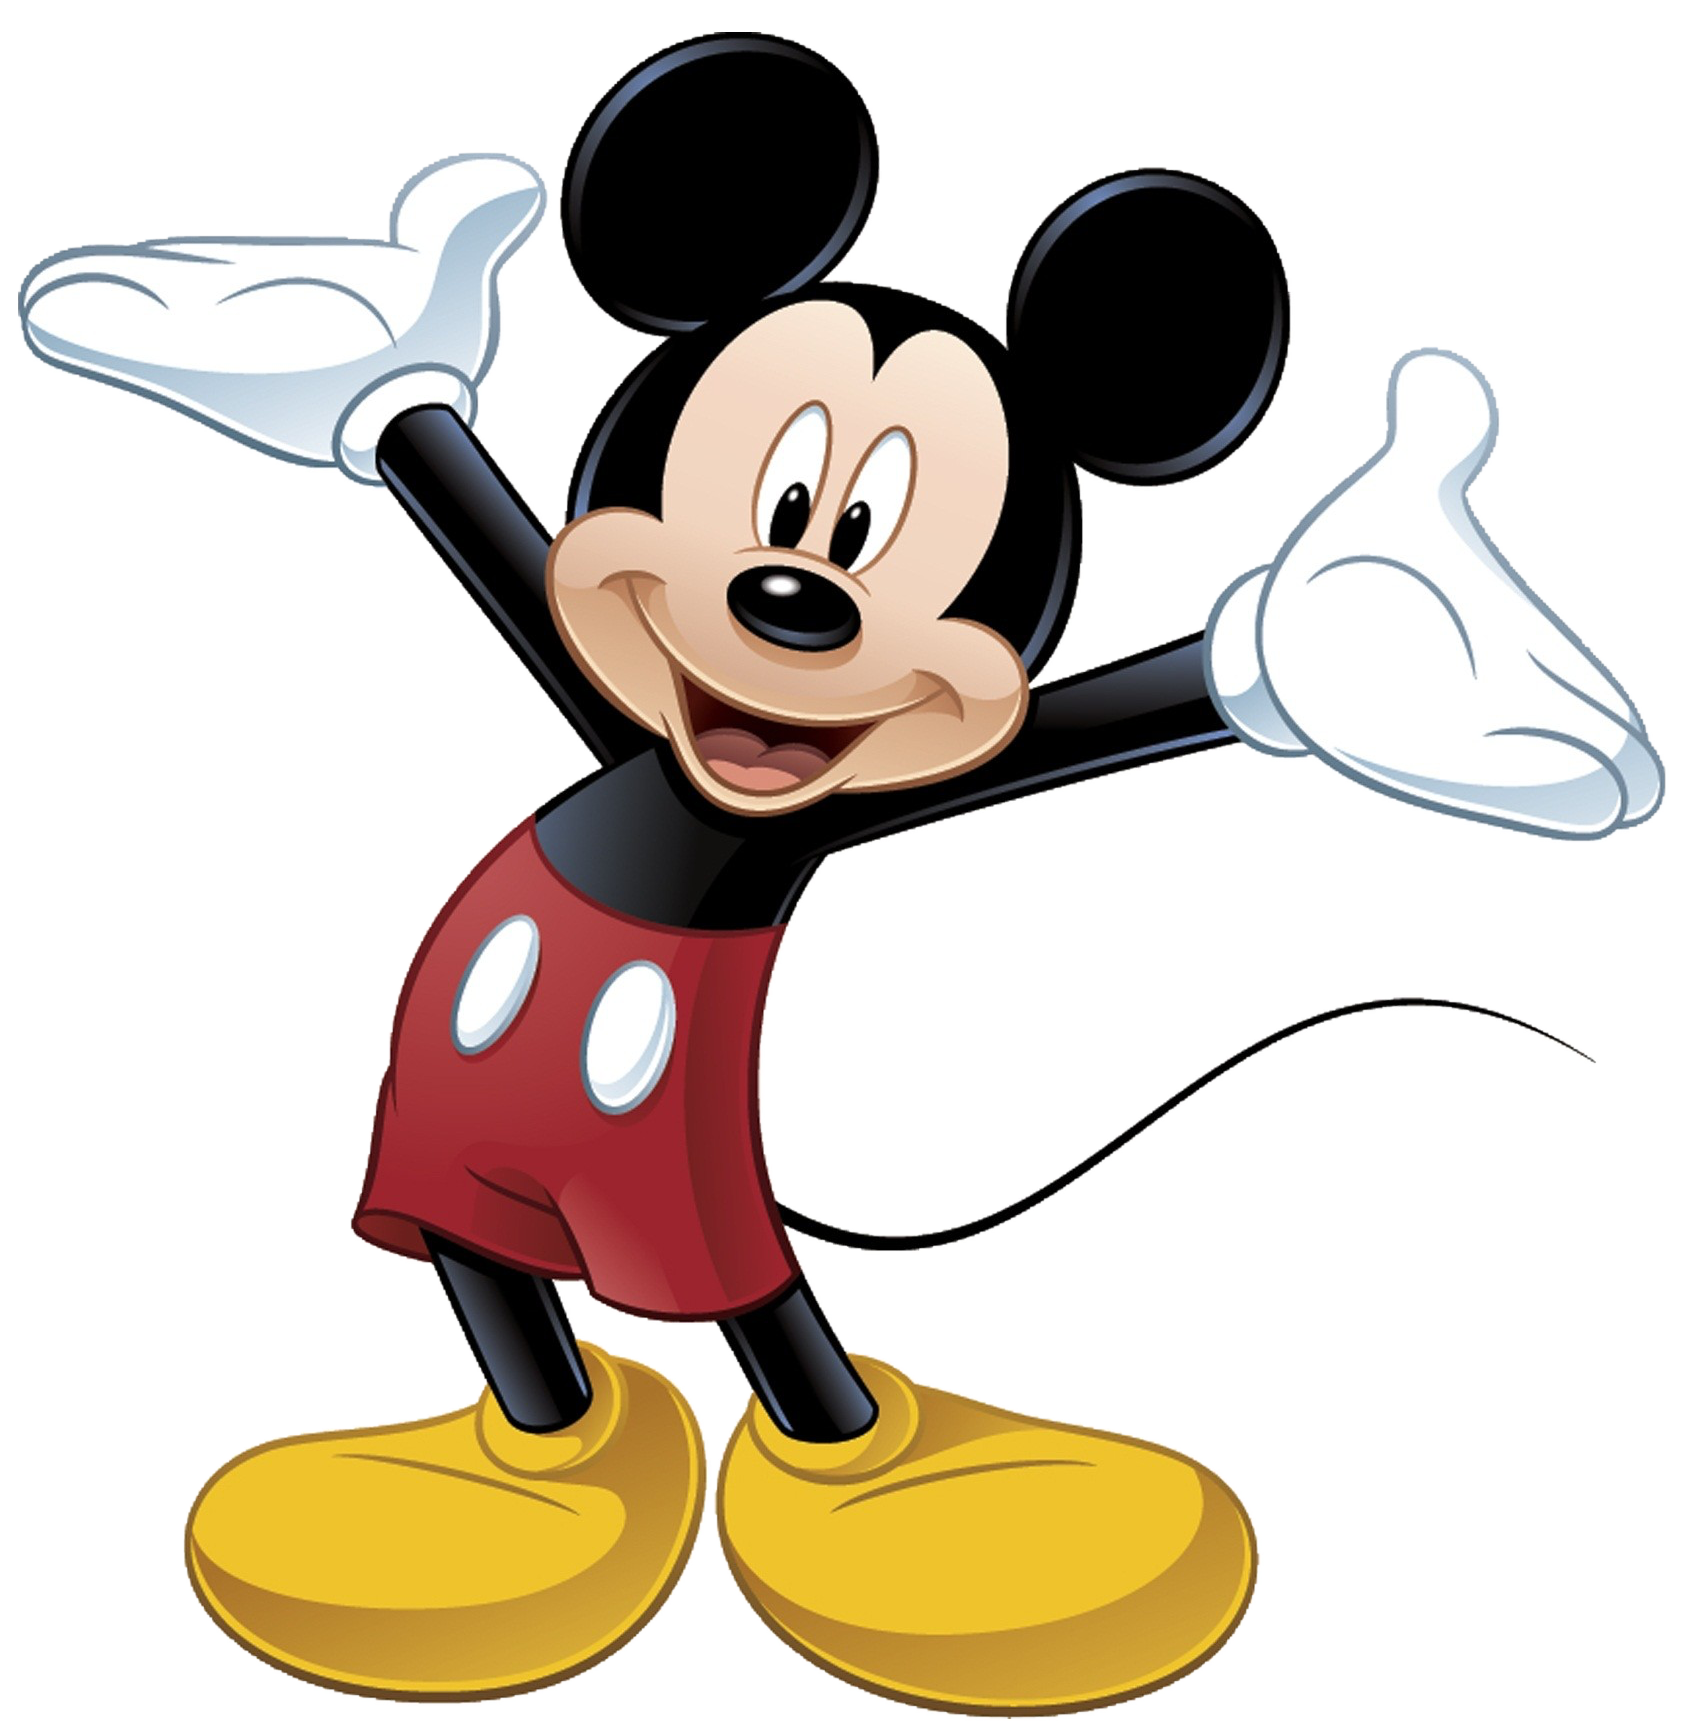 Walt Disney MICKEY MOUSE COLORS & LOGOS ICON PINK SILVER BLACK TRADING Pin Badge 